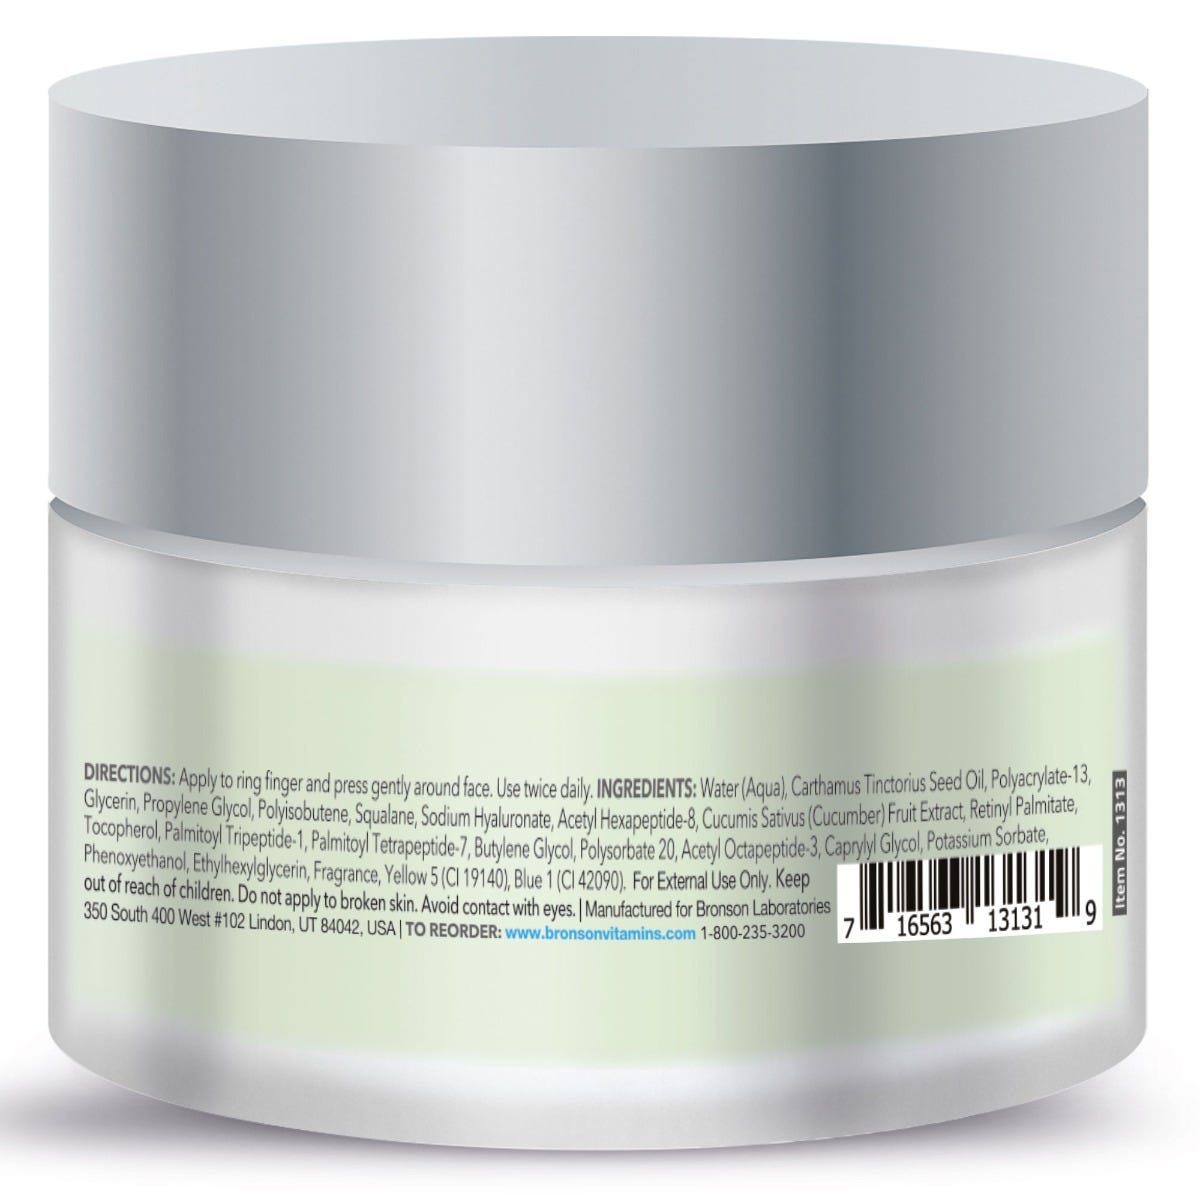 eblume® Anti-aging Cucumber Eye Cream Non-GMO - 0.53 fl oz view 2 of 2